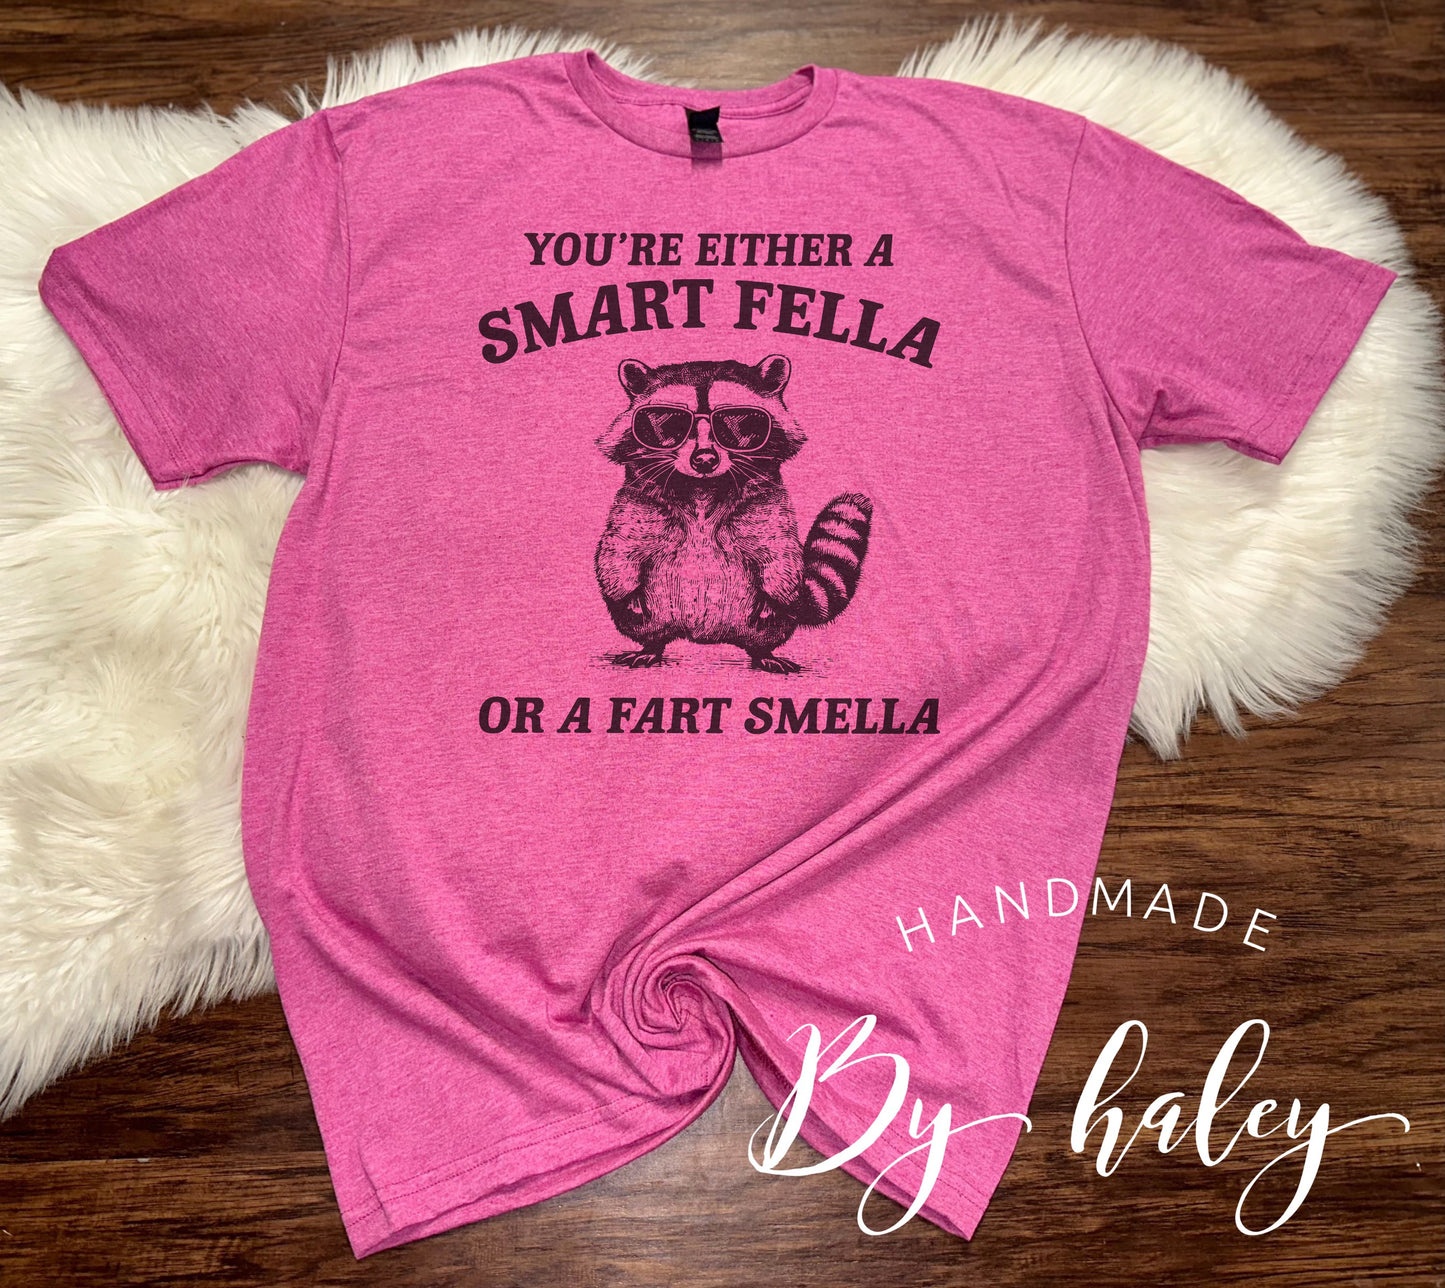 Fart Smella Raccoon T-Shirt